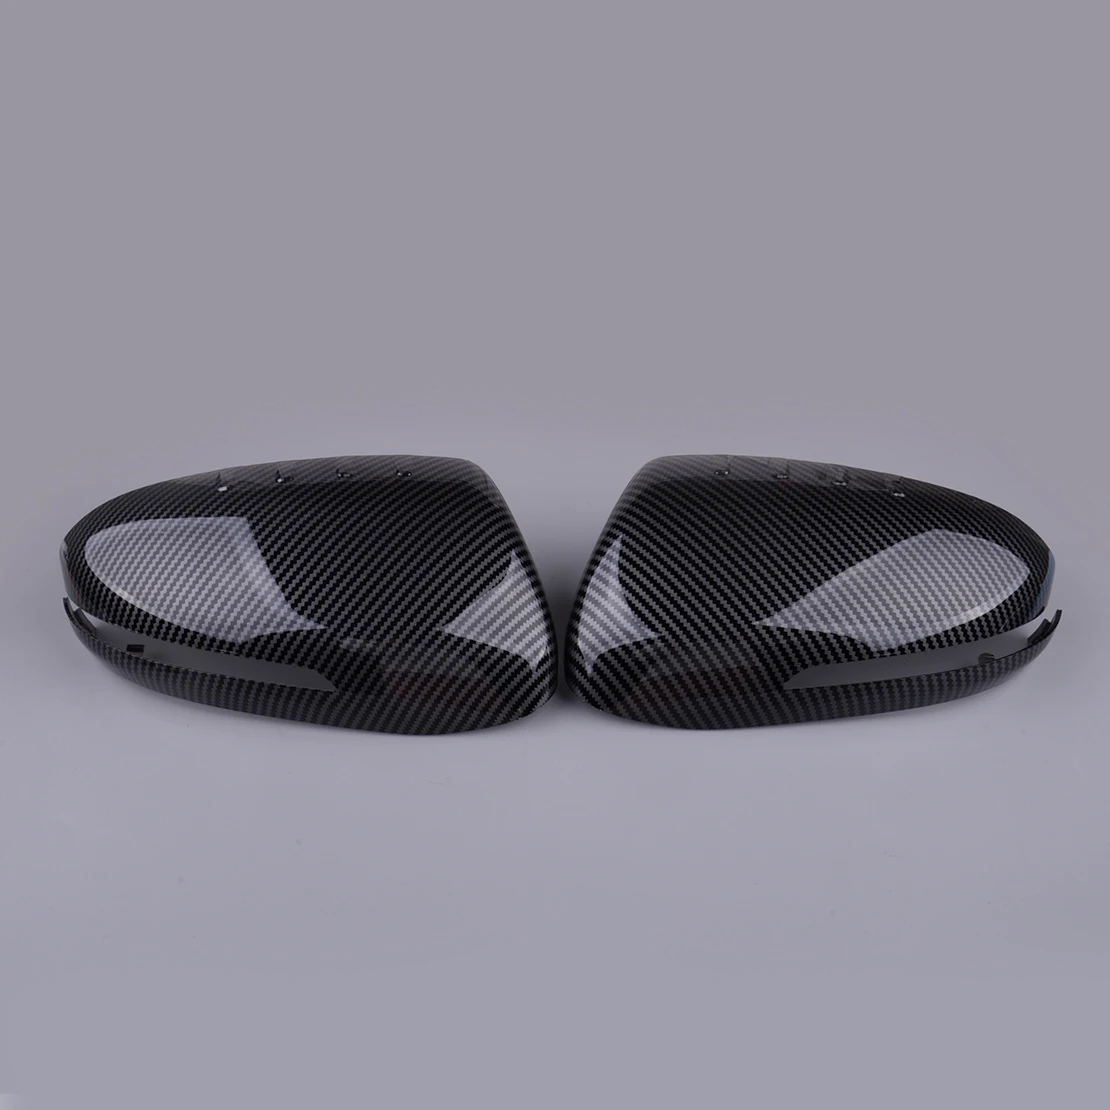 

1 Pair Car Side Door Rearview Mirror Cover Cap Fit for Kia K5 Optima 2011 2012 2013 2014 2015 Black Carbon Fiber Style ABS